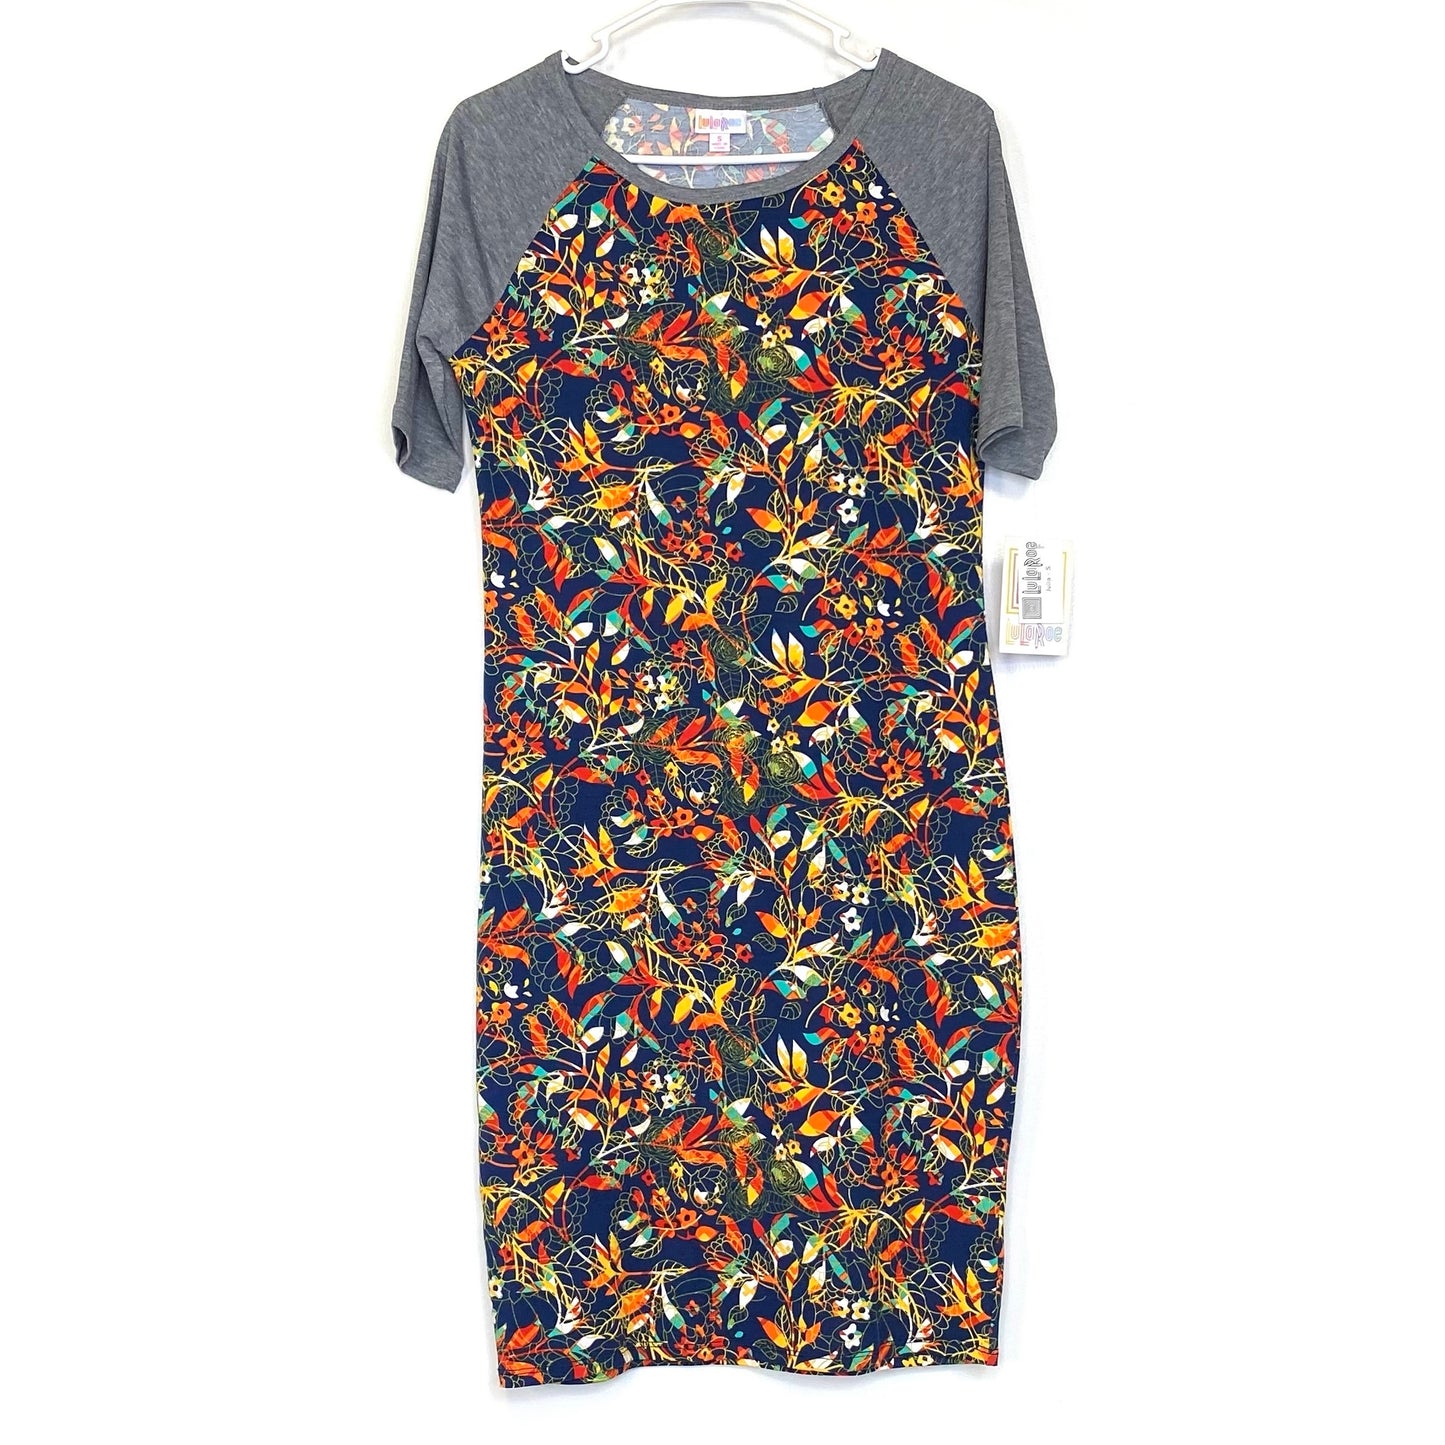 LuLaRoe Womens S Gray/Blue/Orange Abstract-Floral Julia Shift Dress Scoop Neck ½ Sleeves NWT